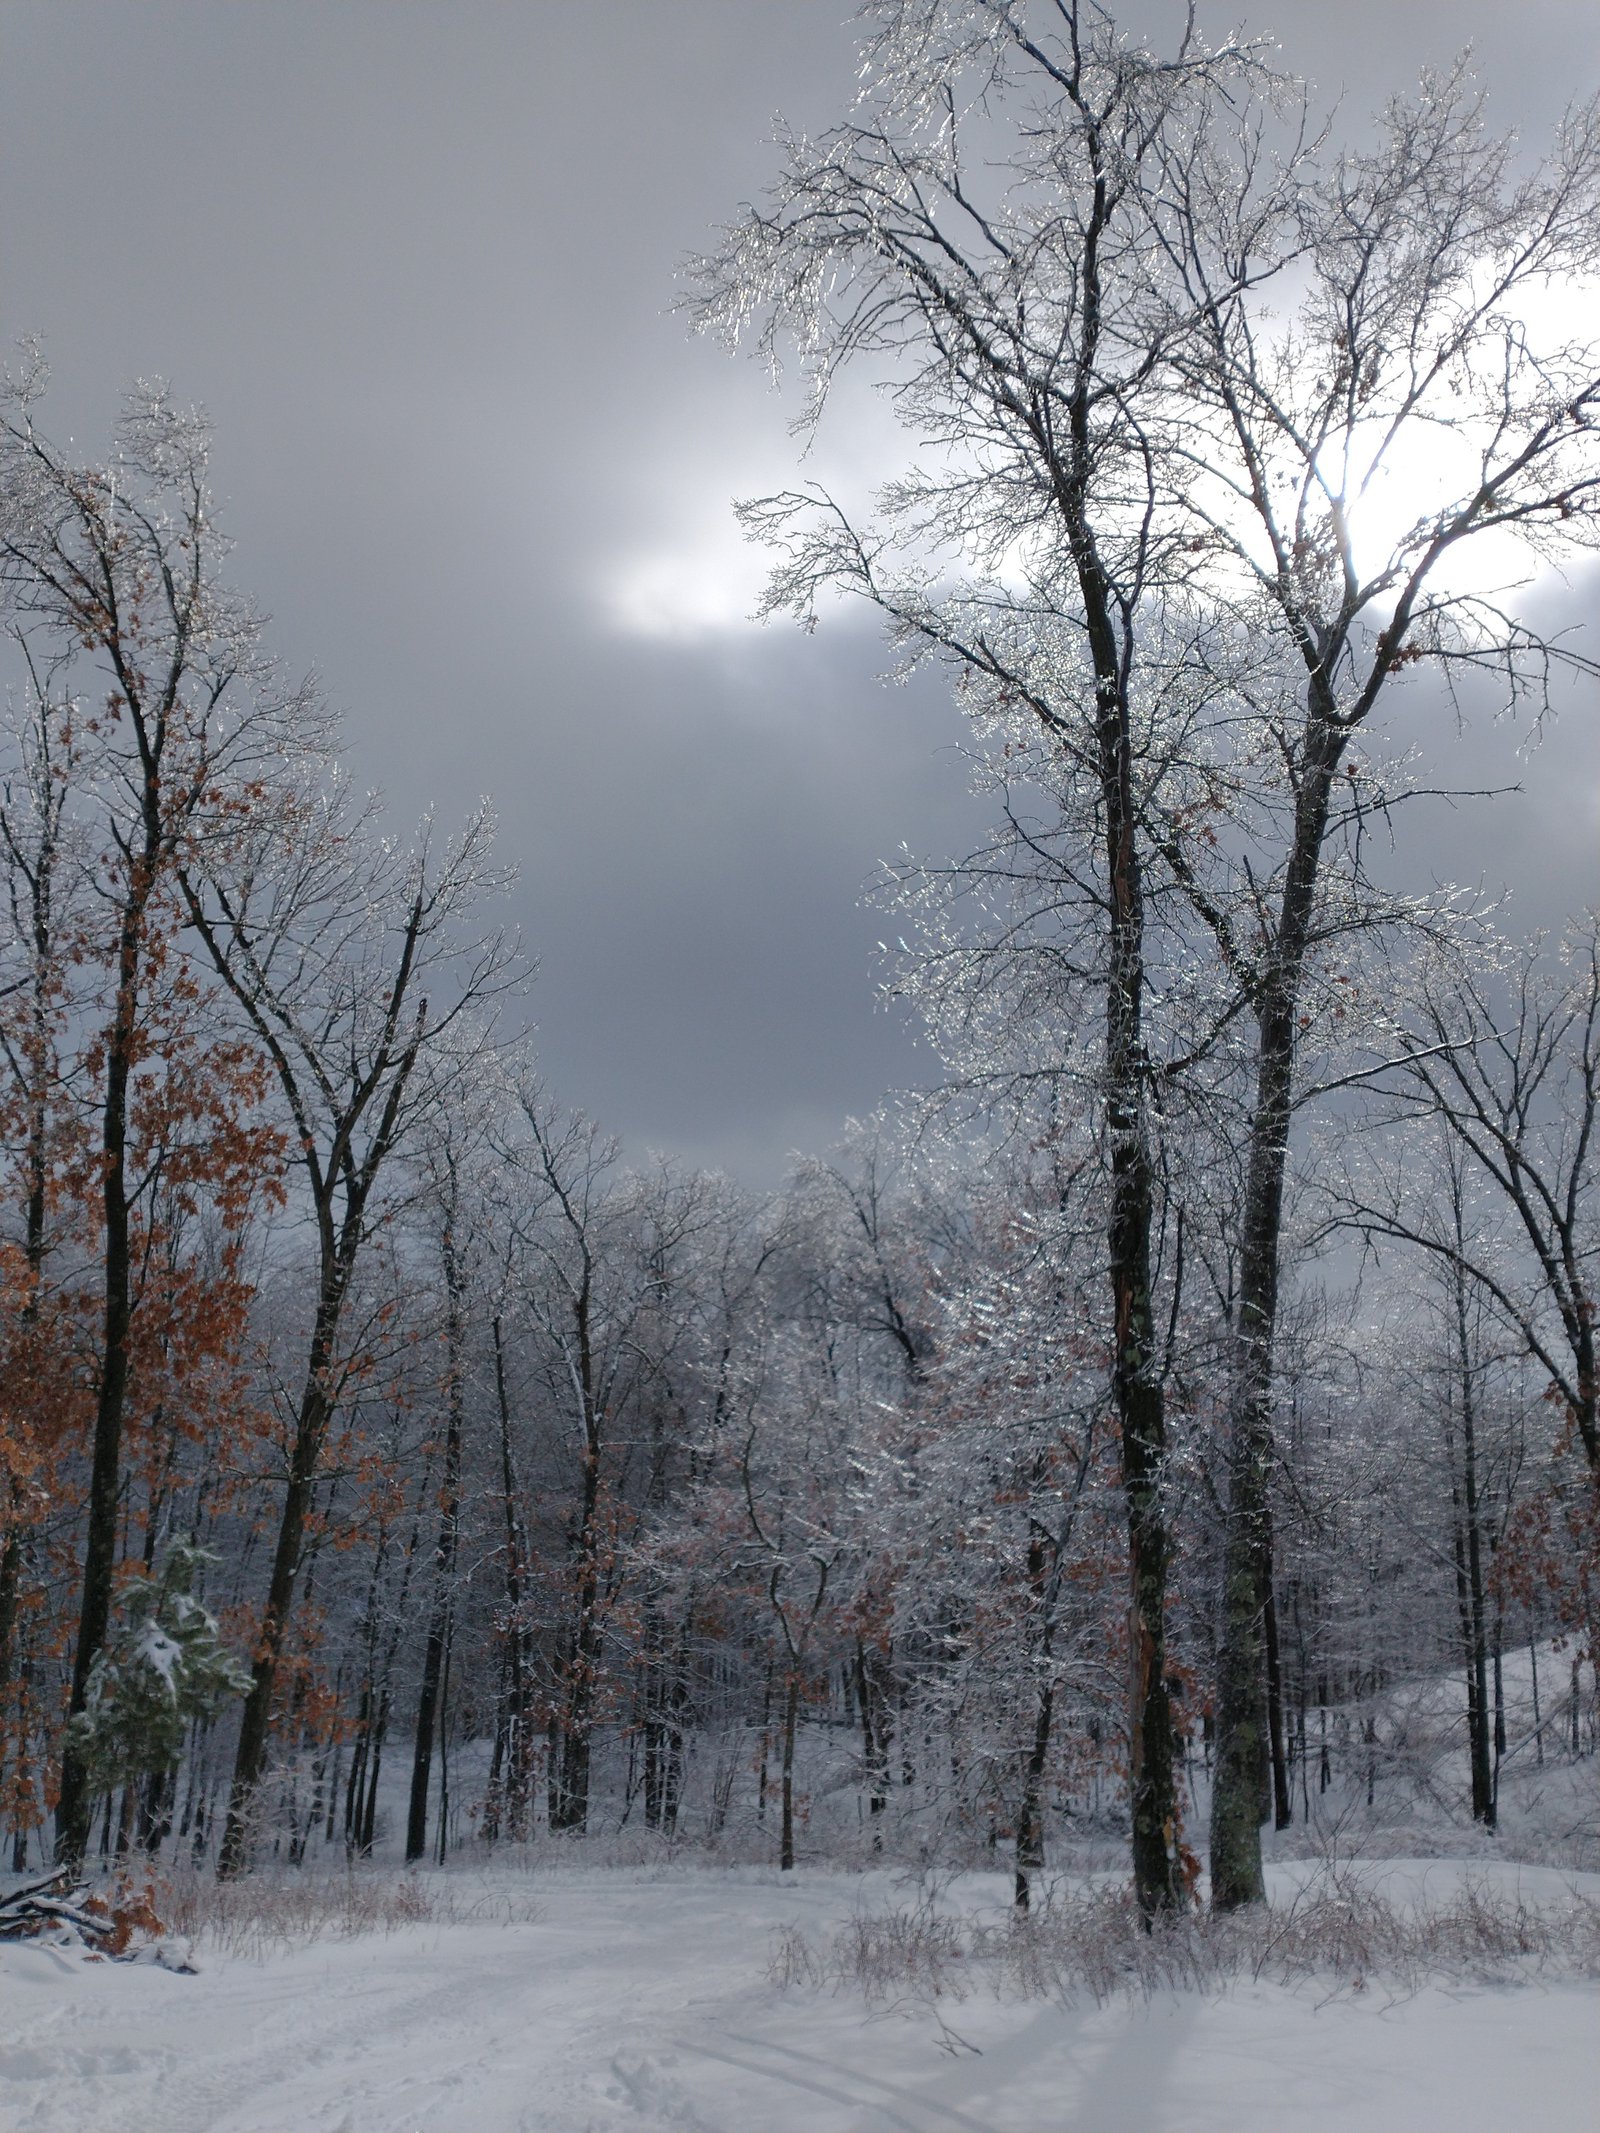 Glistening icy snowy trees